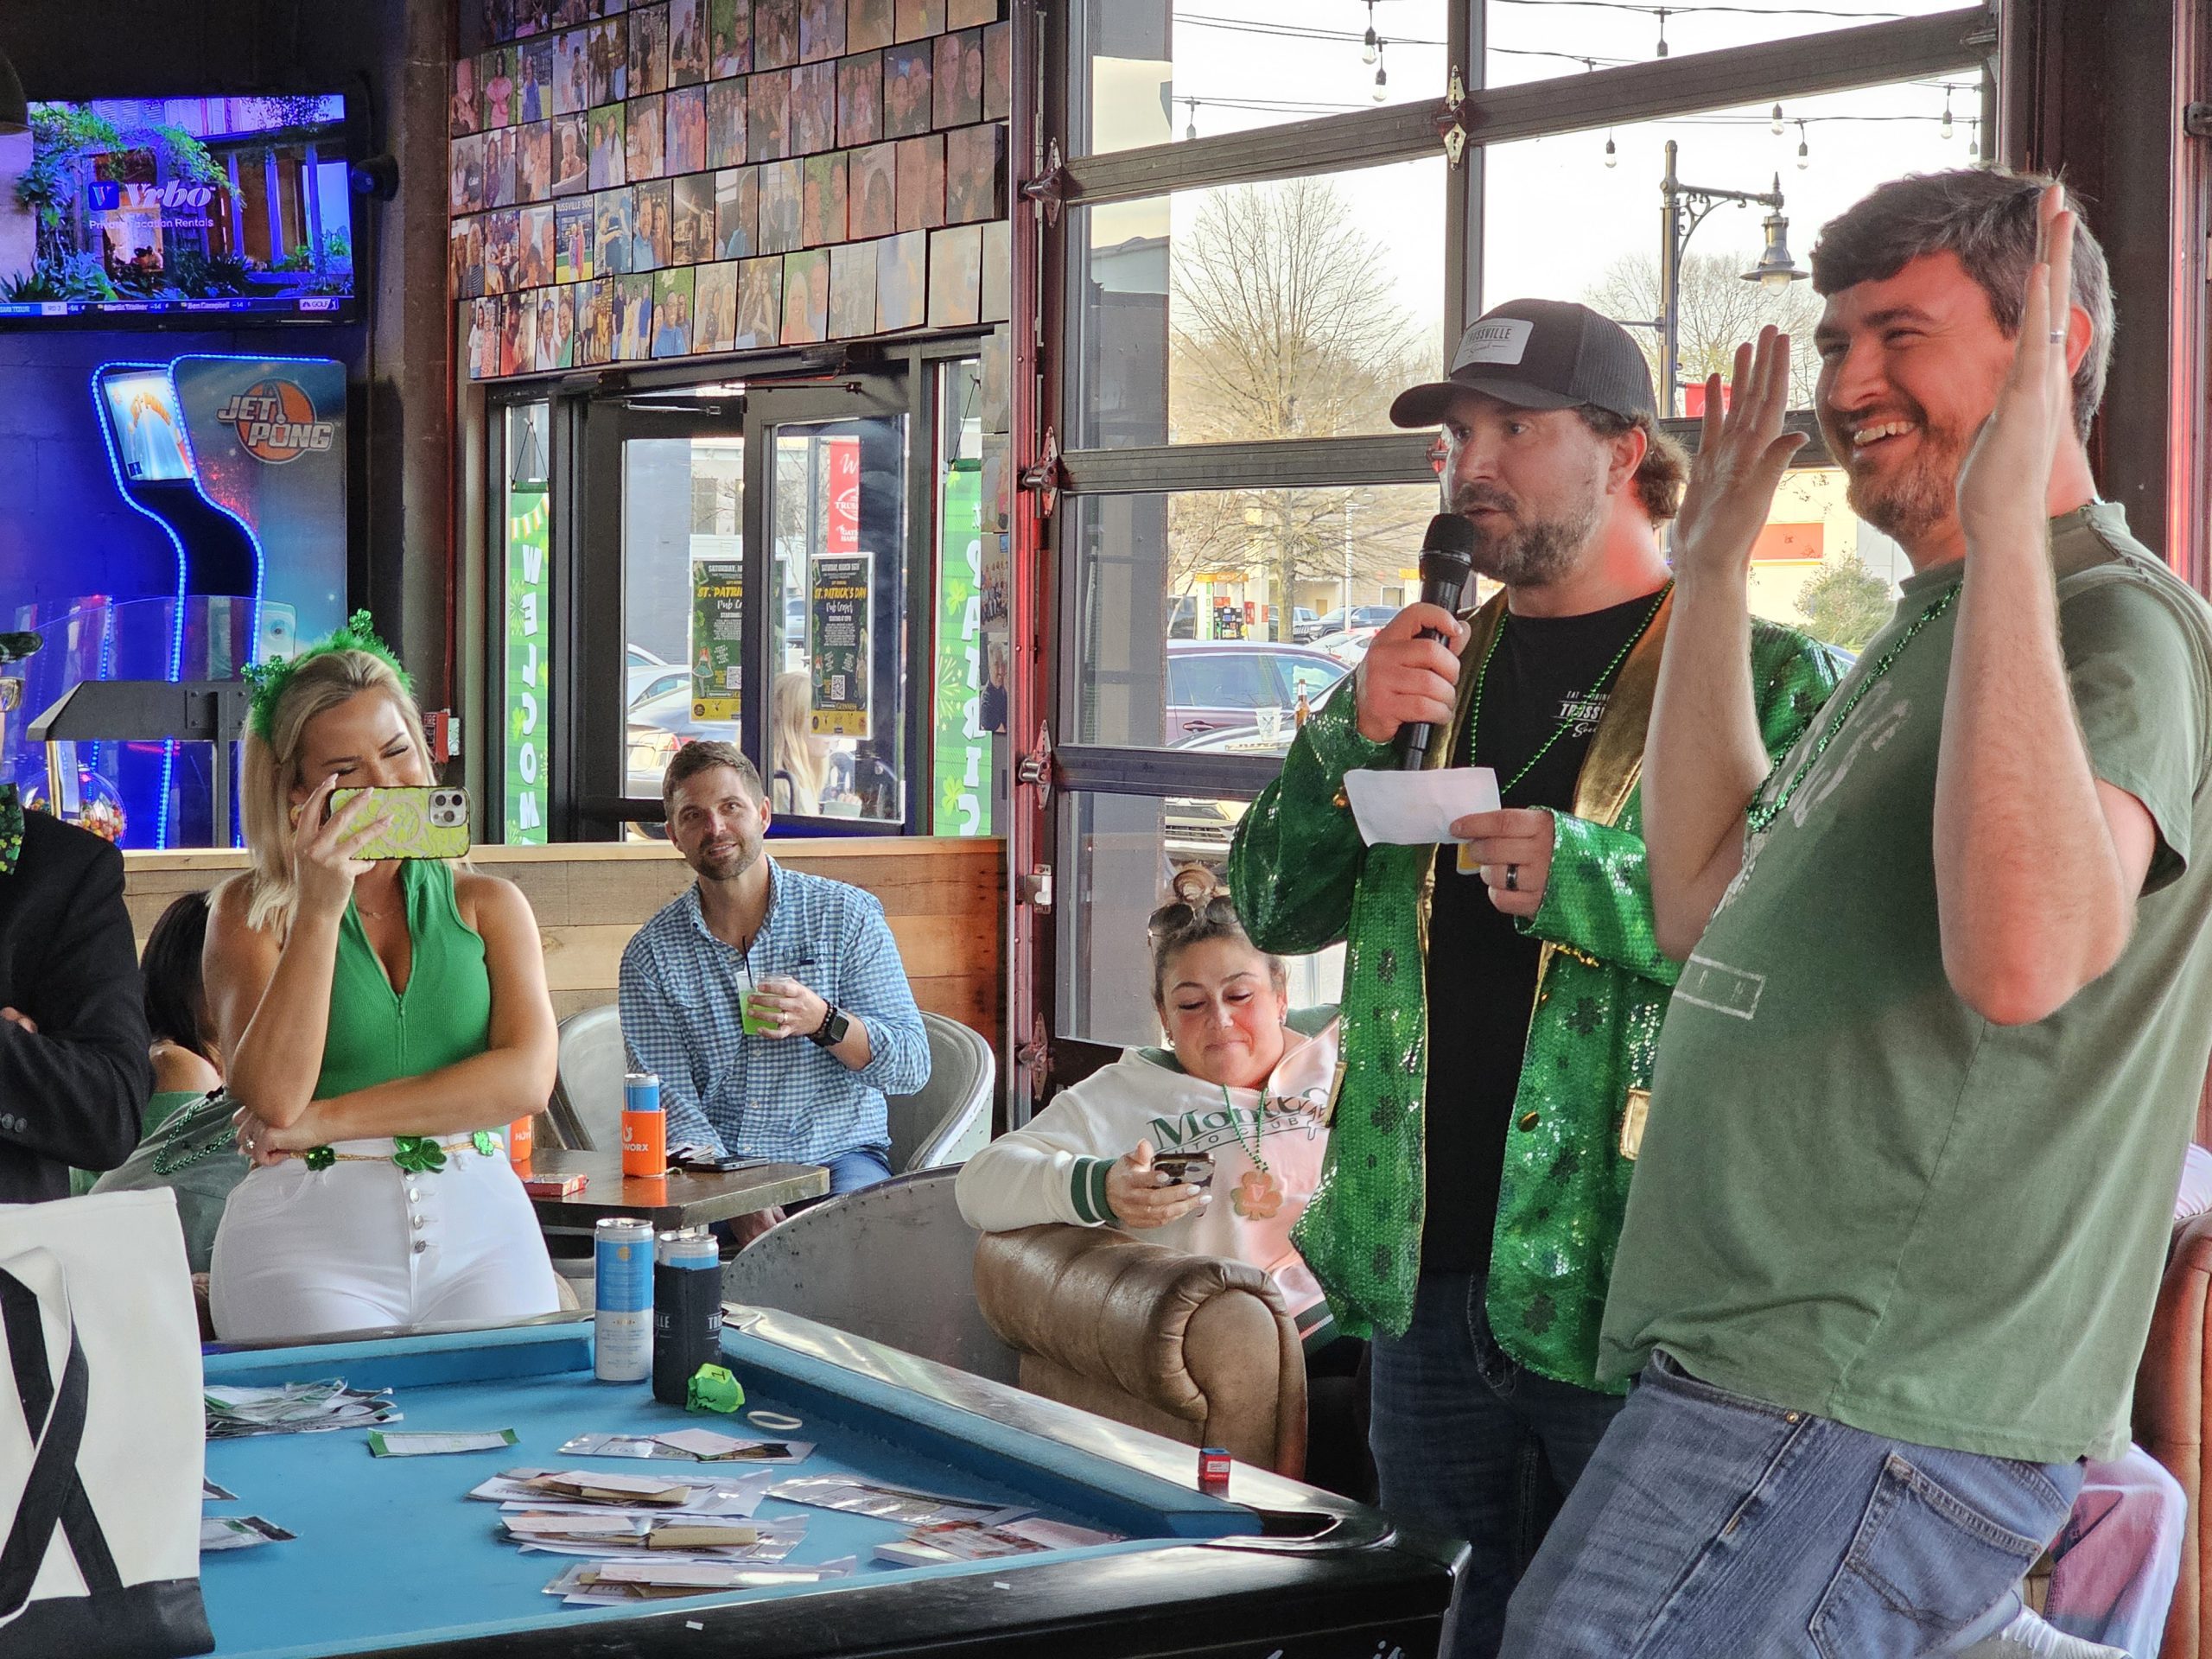 Trussville Entertainment District celebrates first-ever St. Patrick's Day Pub Crawl